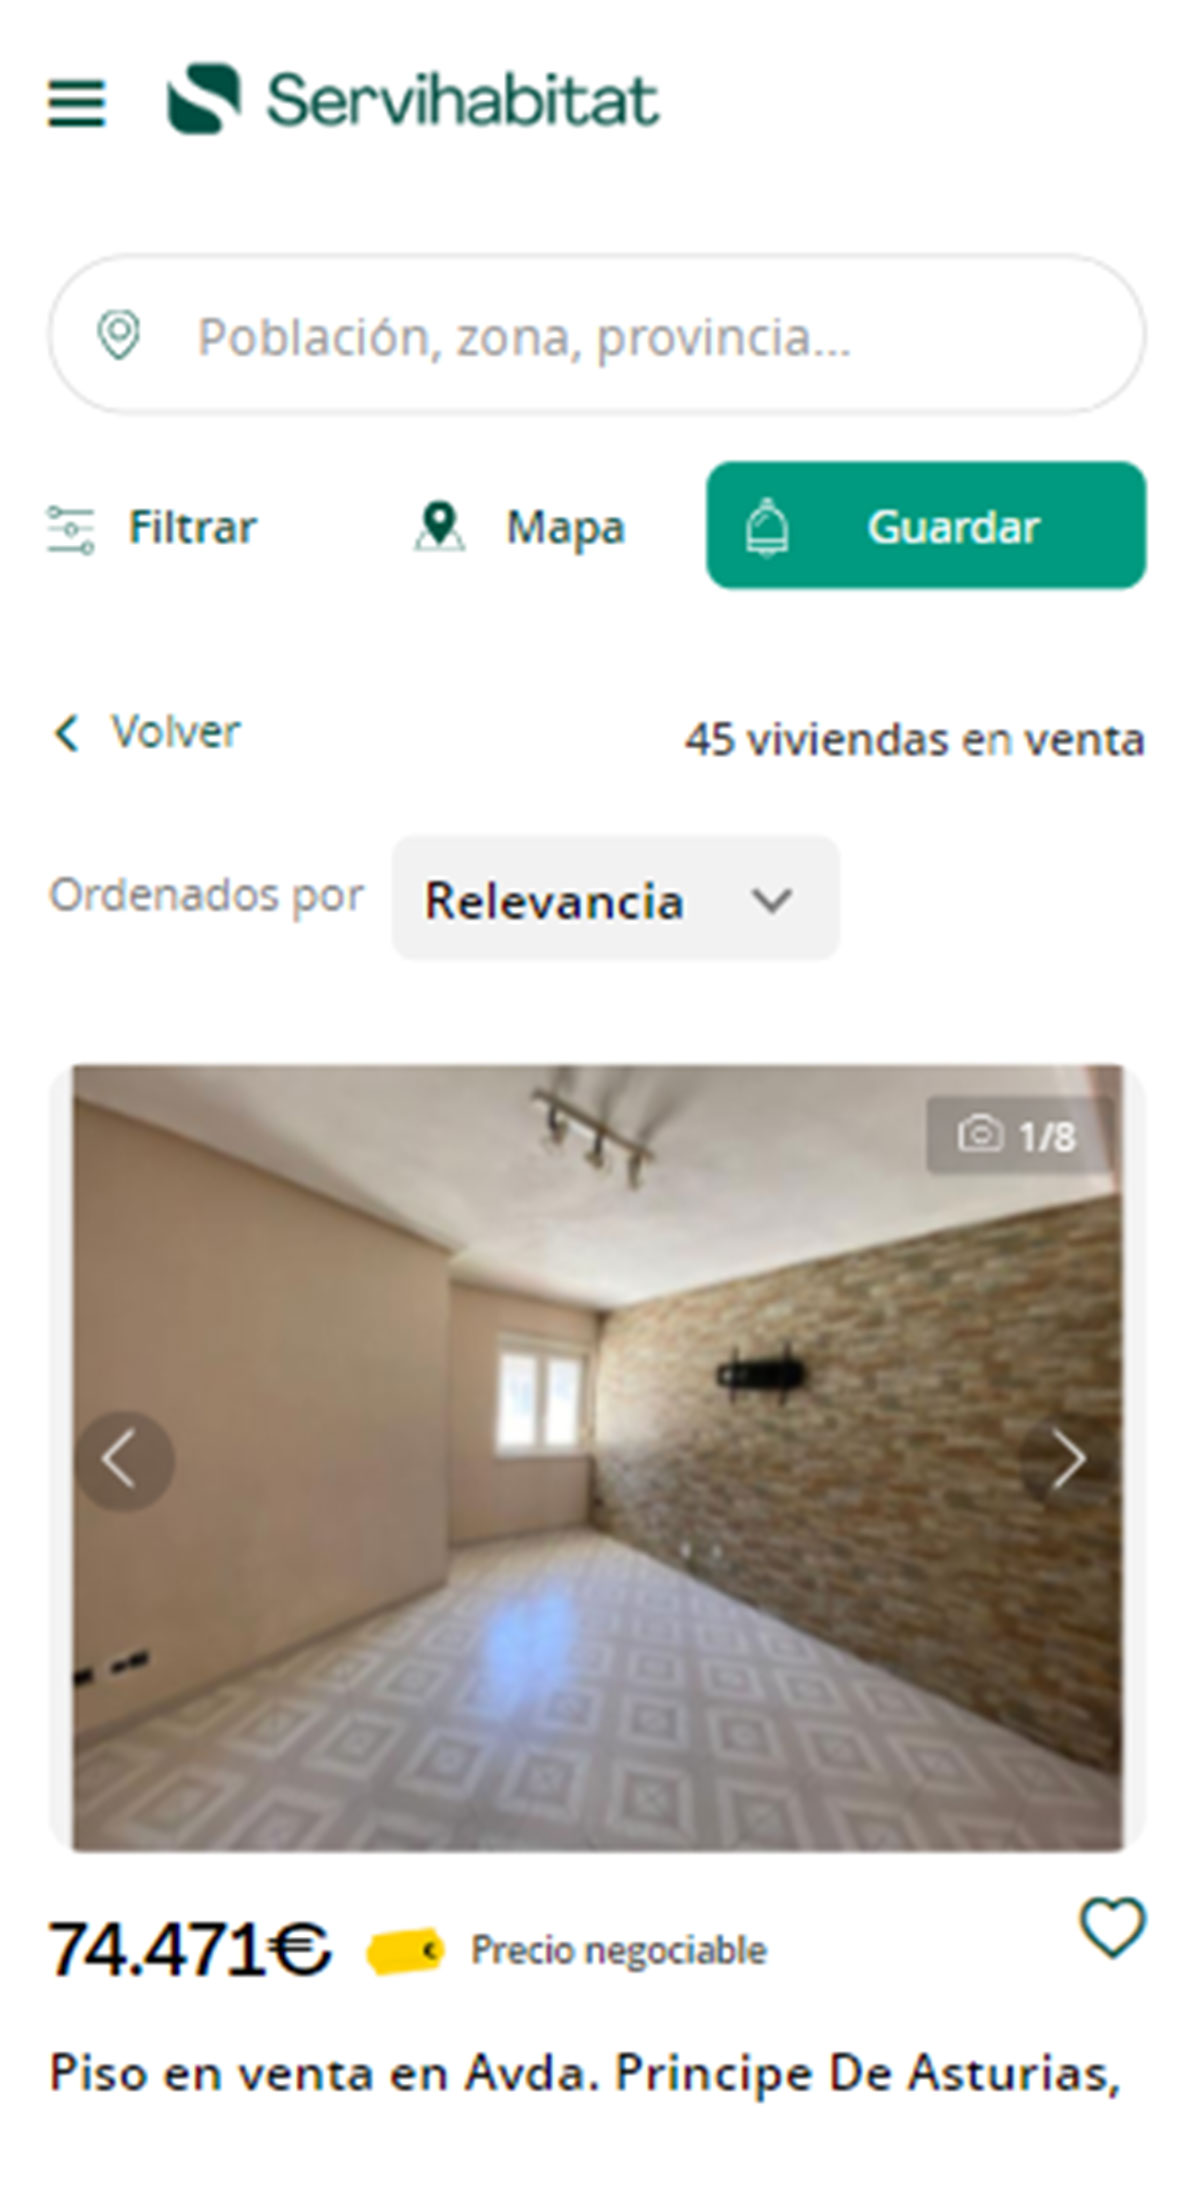 Catálogo de viviendas en Servihabitat en Asturias